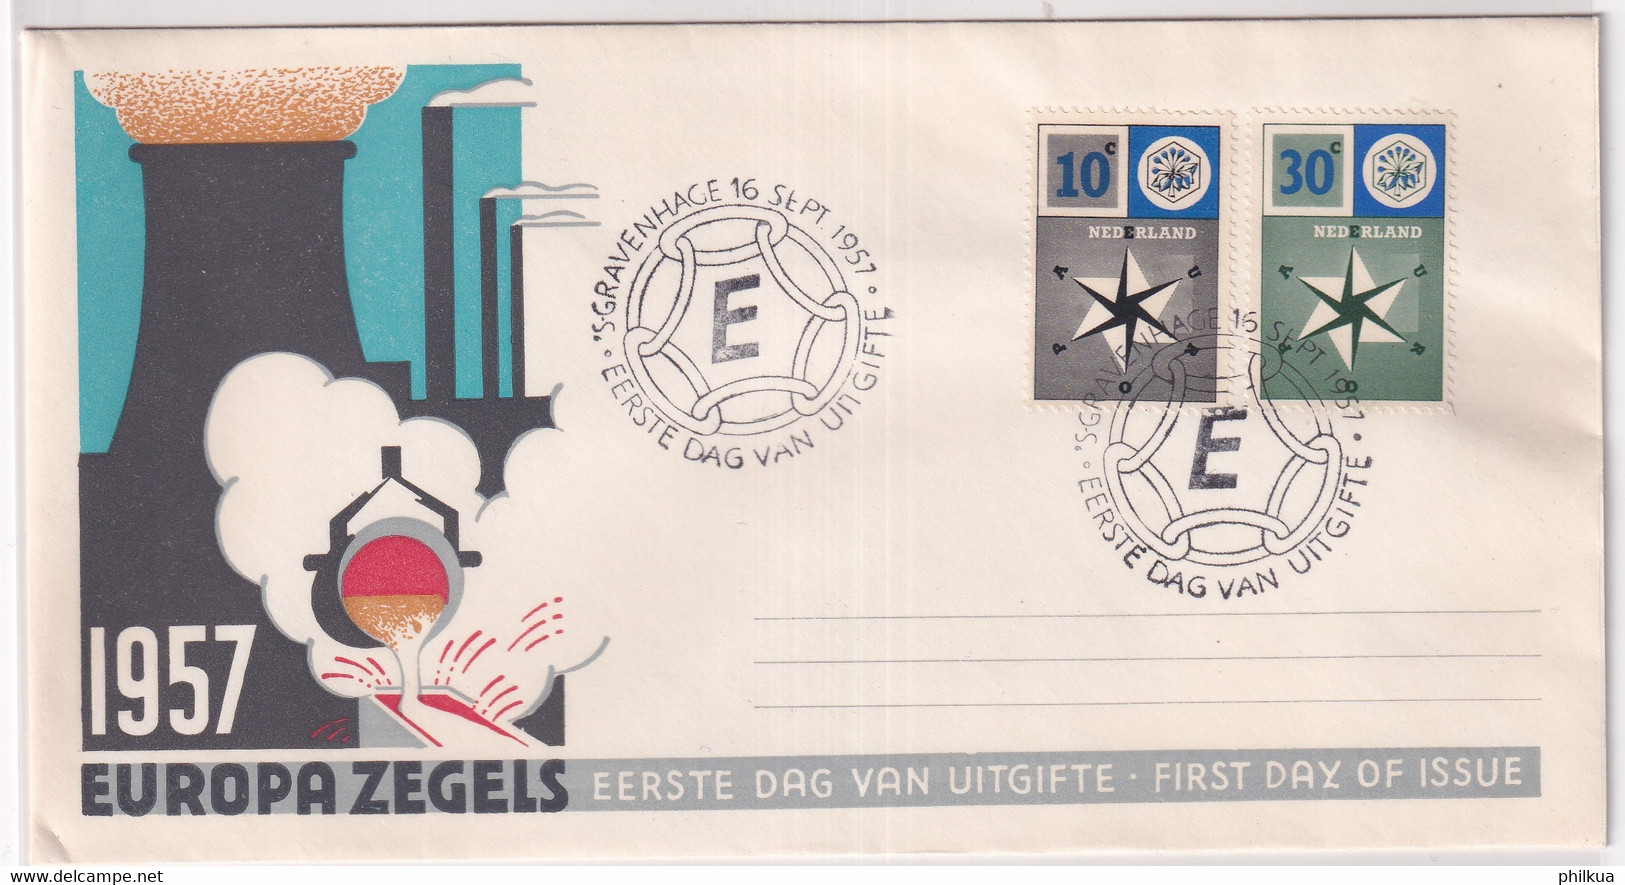 MiNr. 704 - 705 Niederlande 1957, 16. Sept. Europa - FDC - 1957